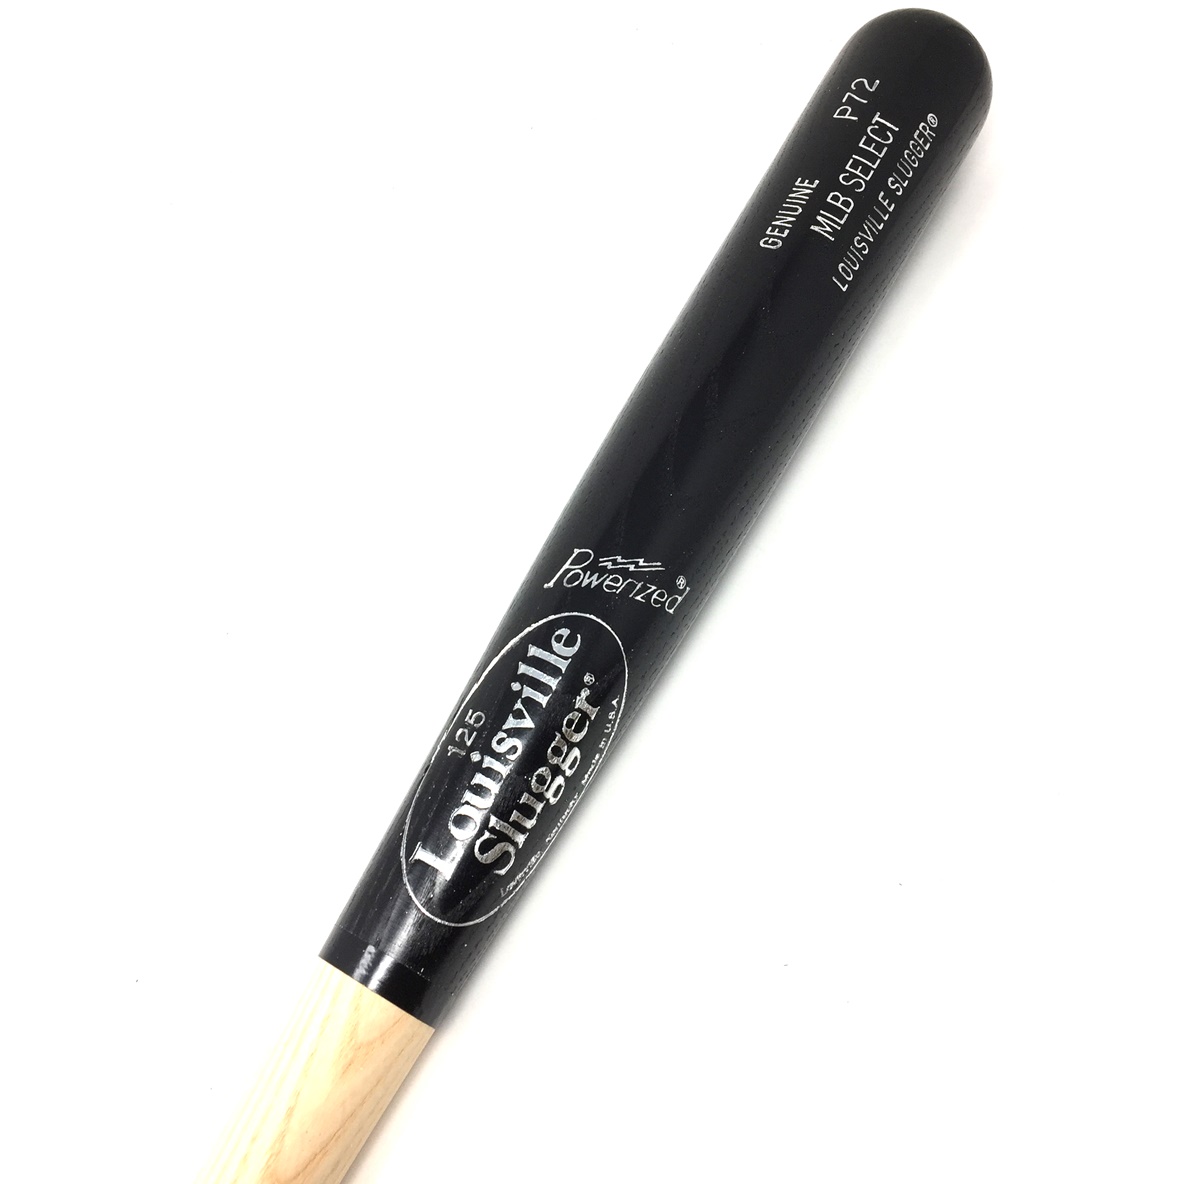 Louisville Slugger MLB Select Ash Wood Baseball Bat. P72 Turning Model.